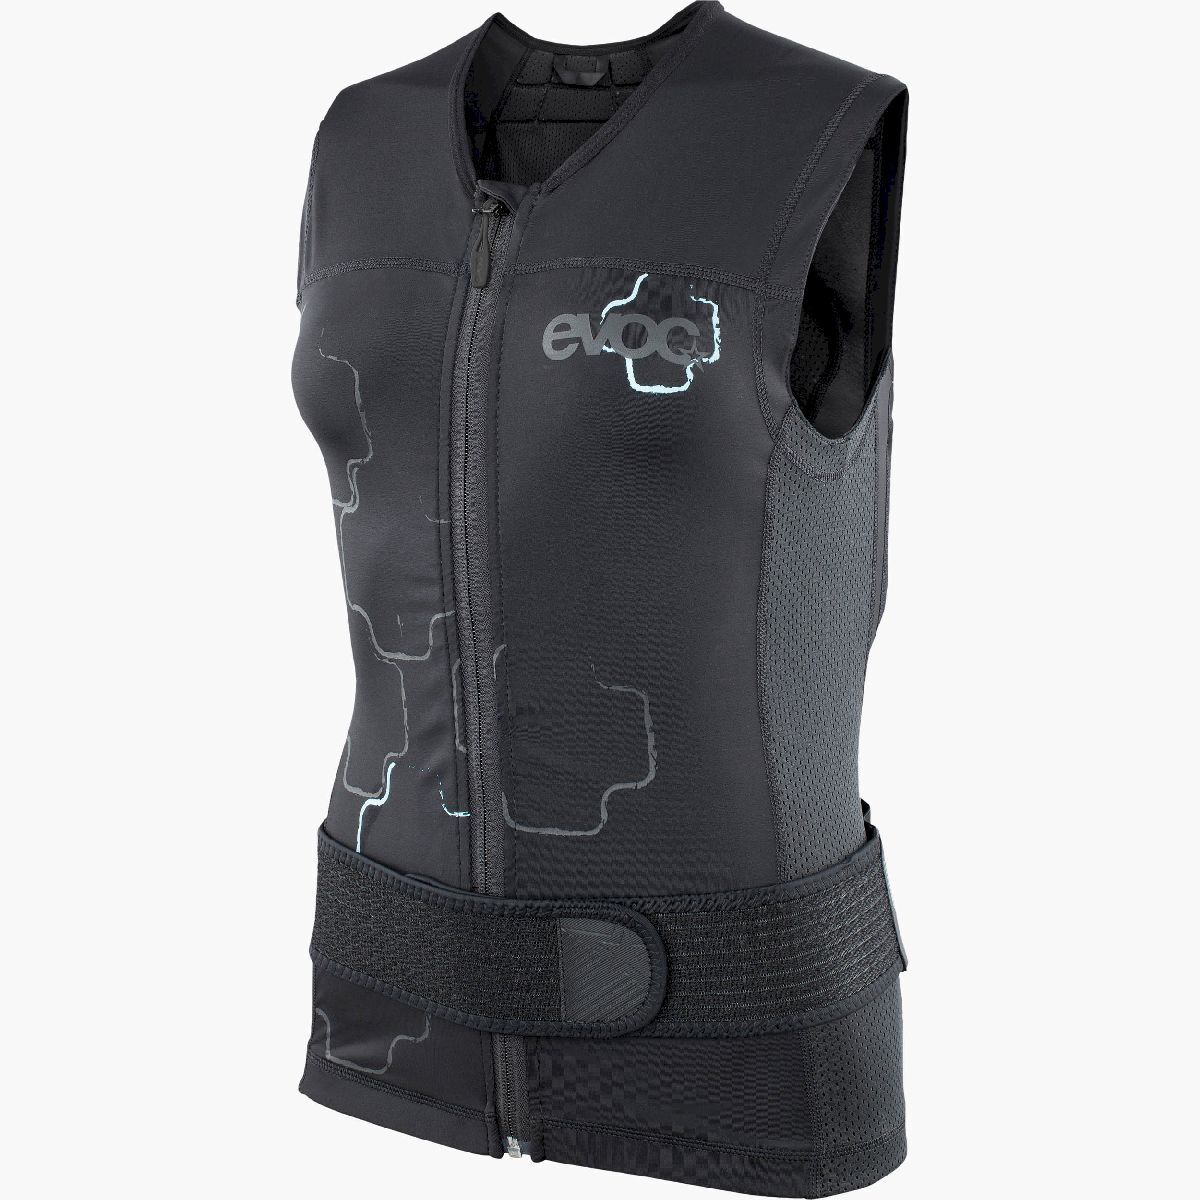 Evoc Protector Vest Lite - Back protector - Women's